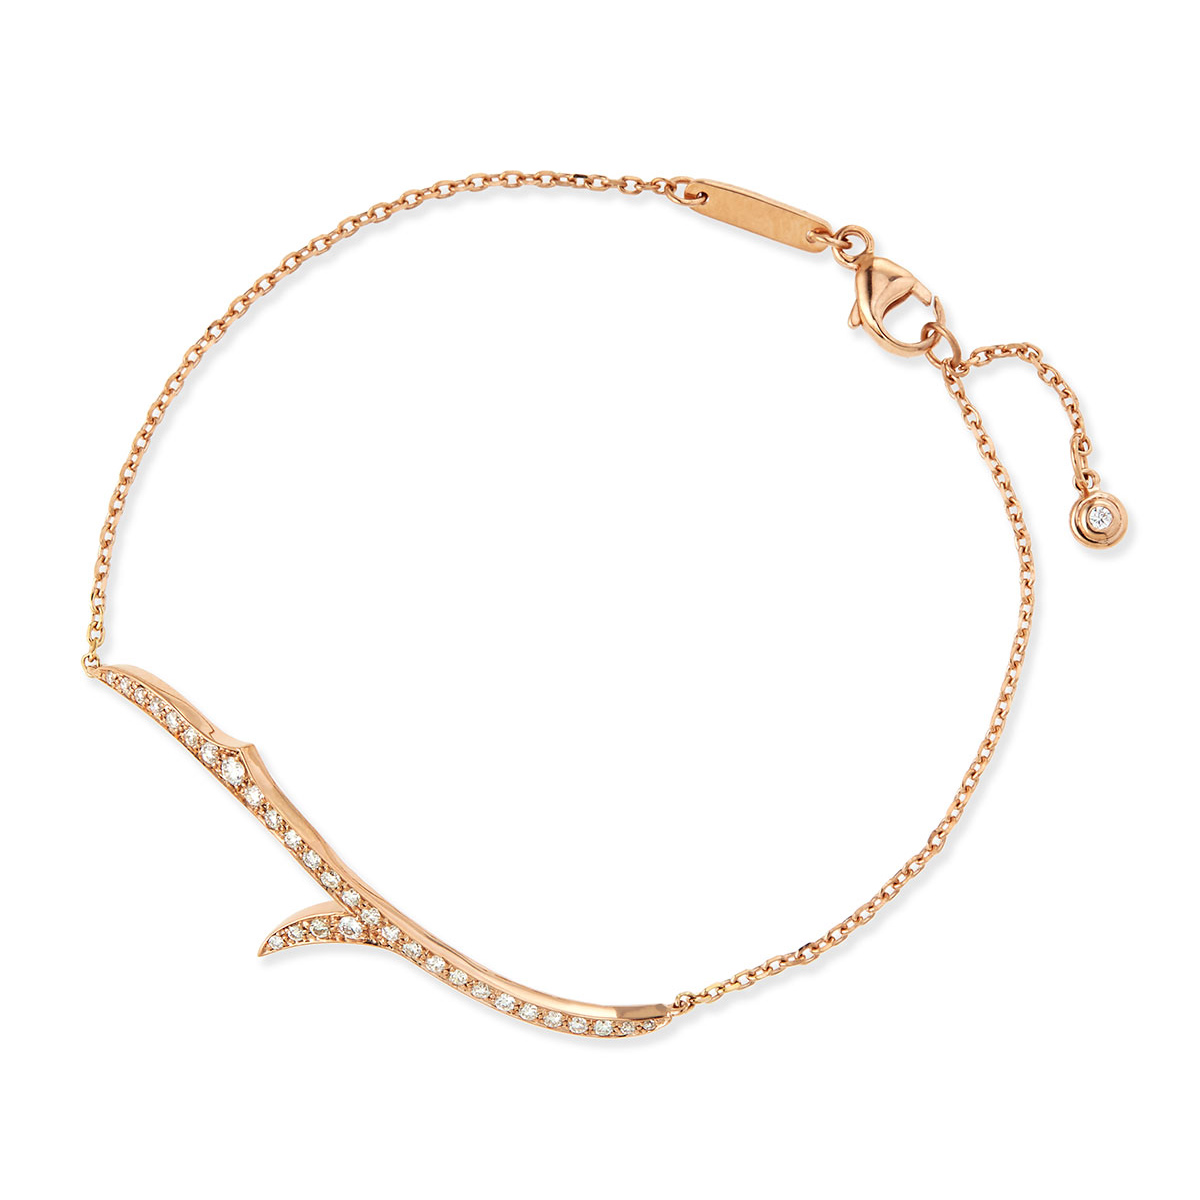 Wholesale OEM/ODM Jewelry OEM 18k Rose Gold Bracelet offering custom jewelry service